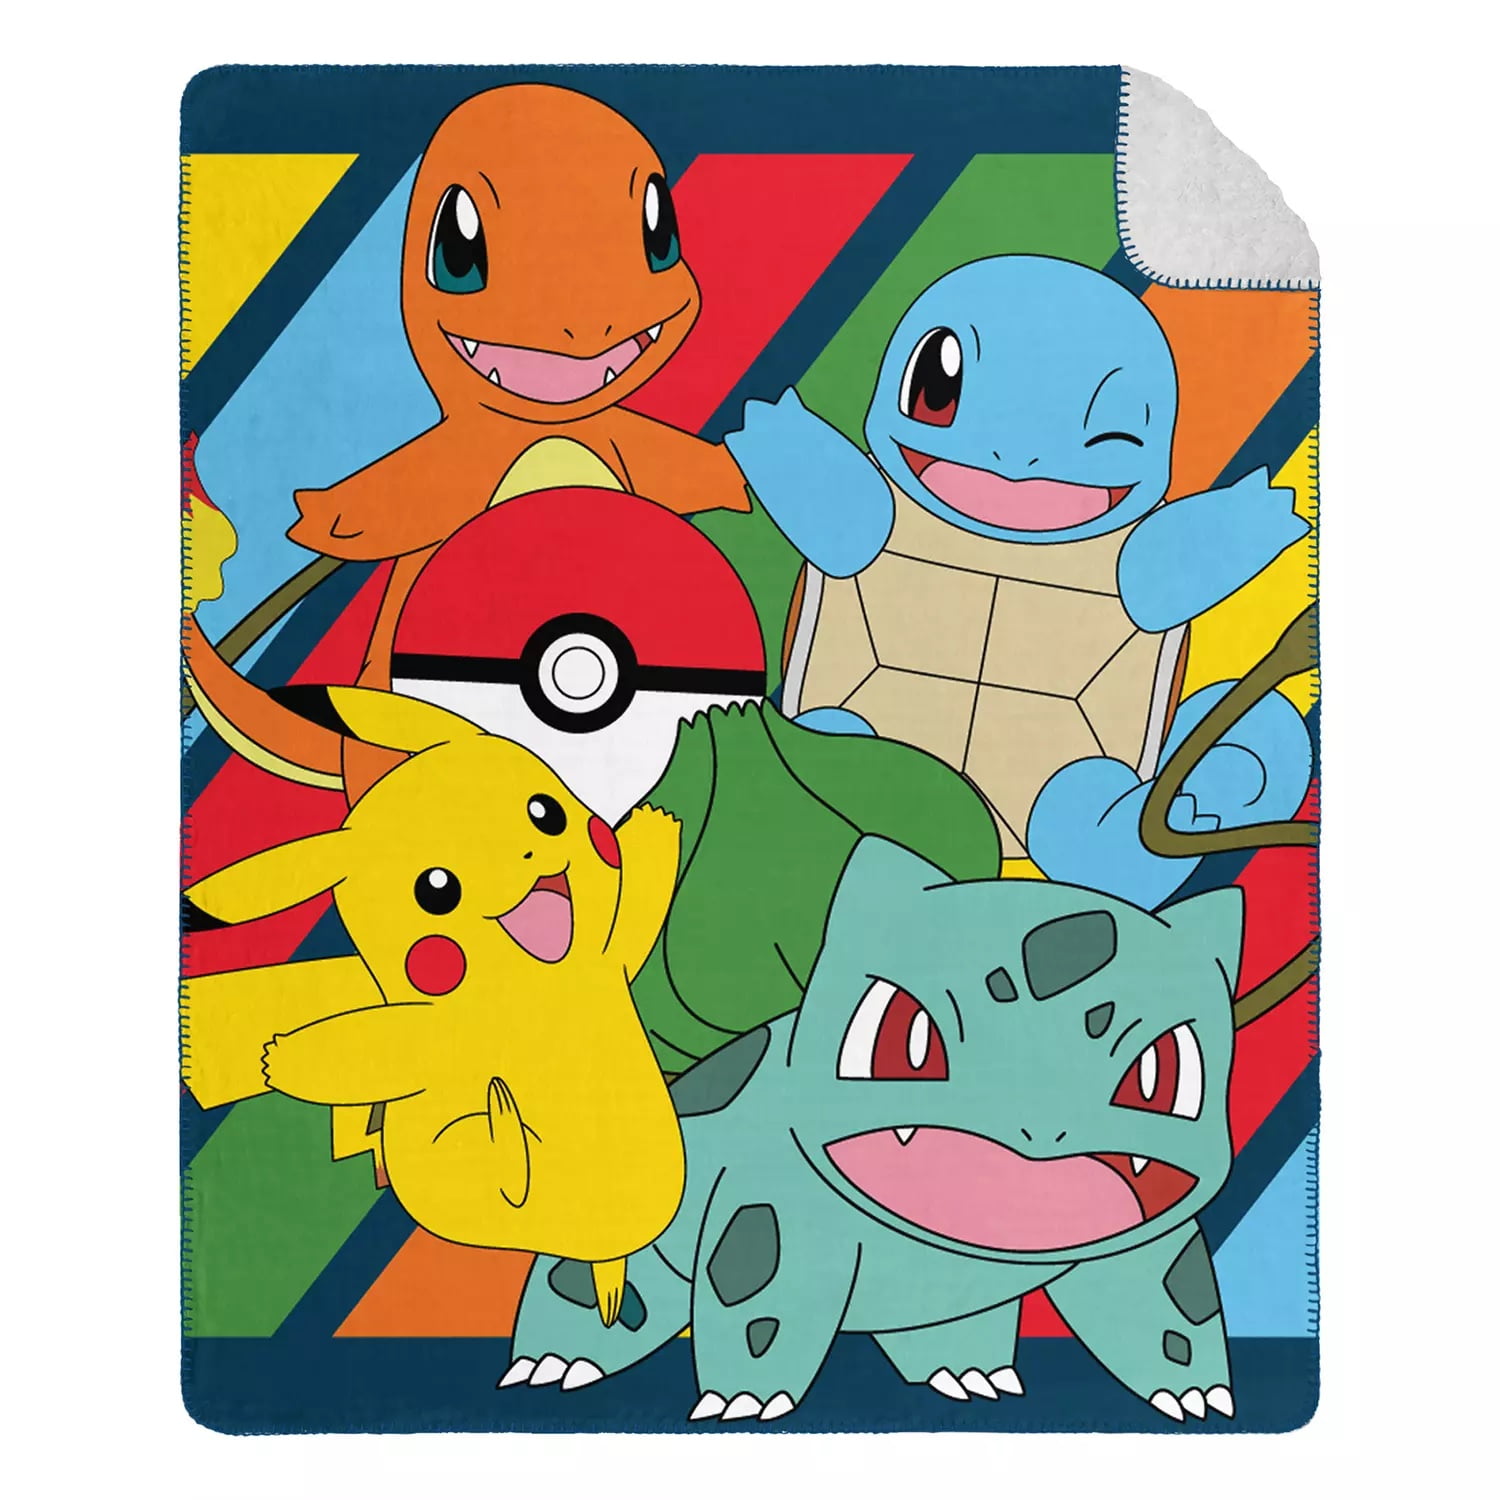 Top Pokémon free games - Softonic